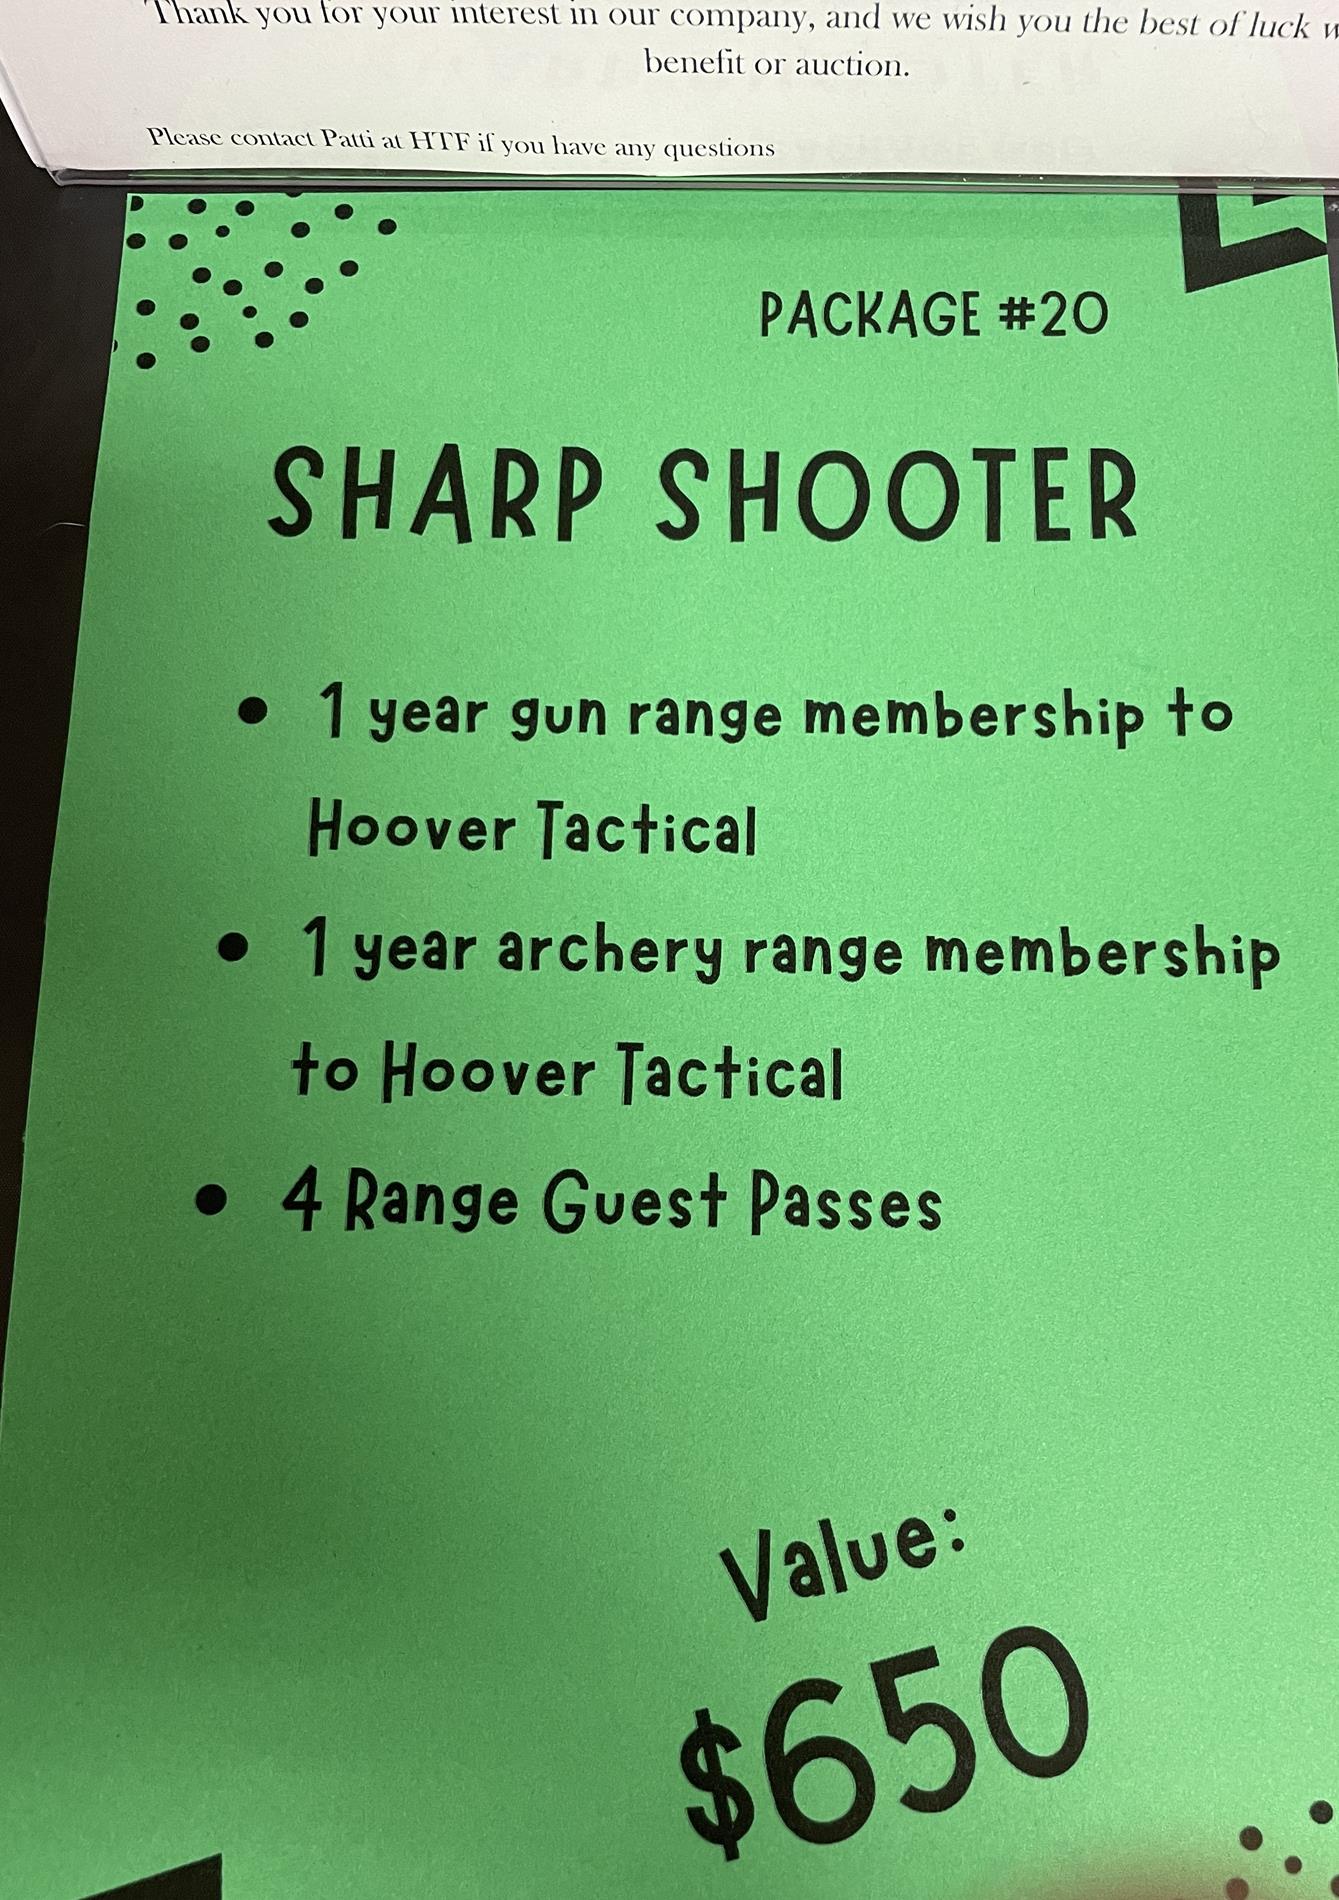 Auction Item #20: Sharp Shooter